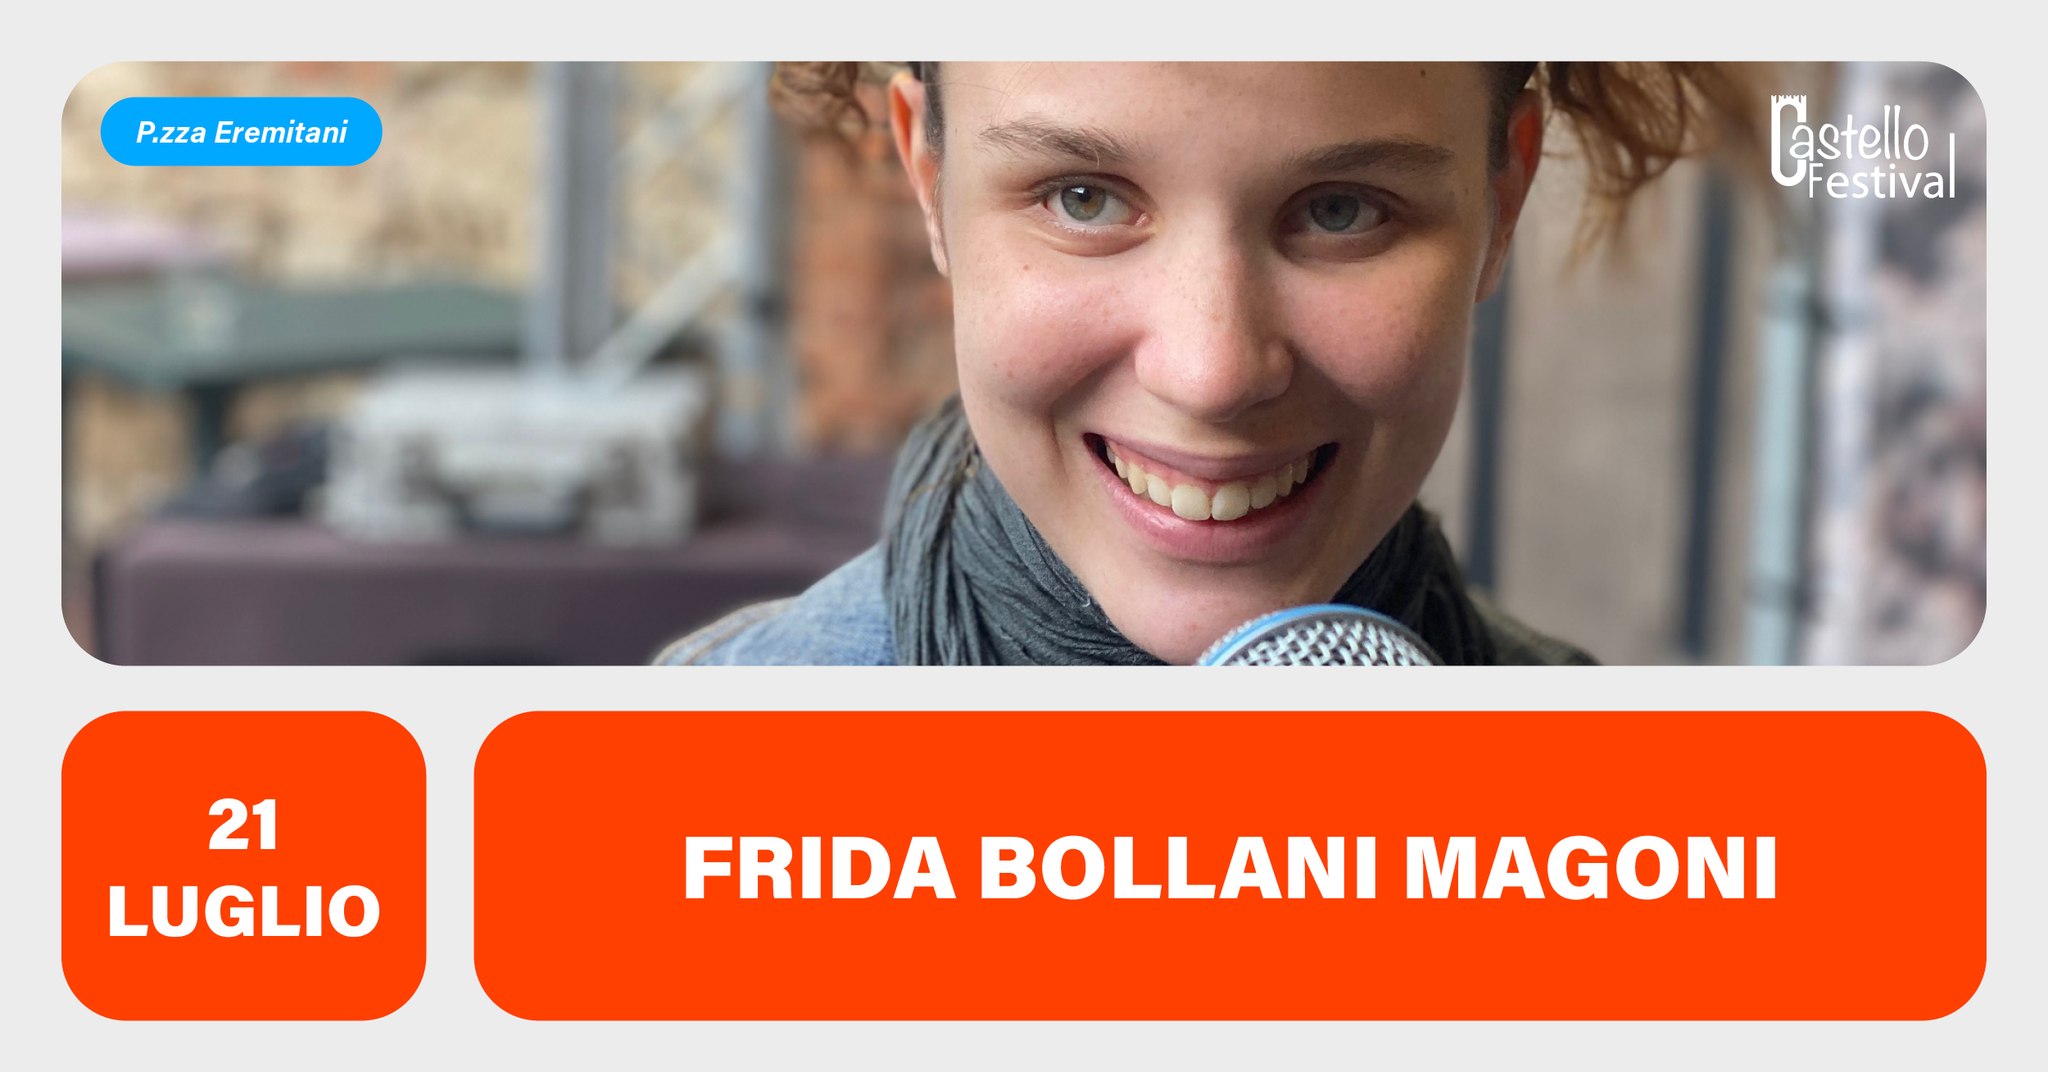 FRIDA BOLLANI MAGONI, In concerto